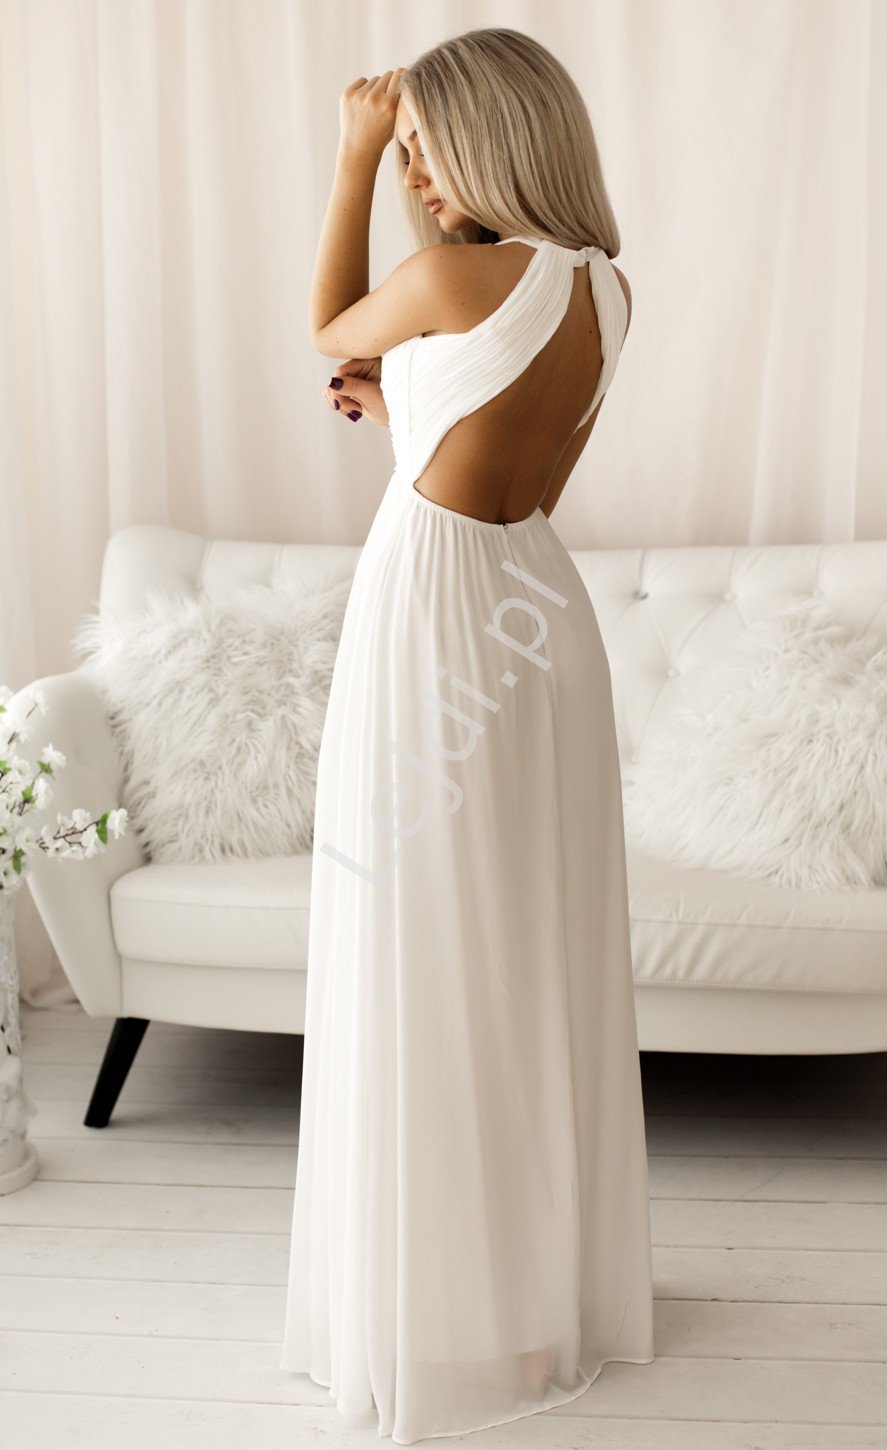 sukienka biała